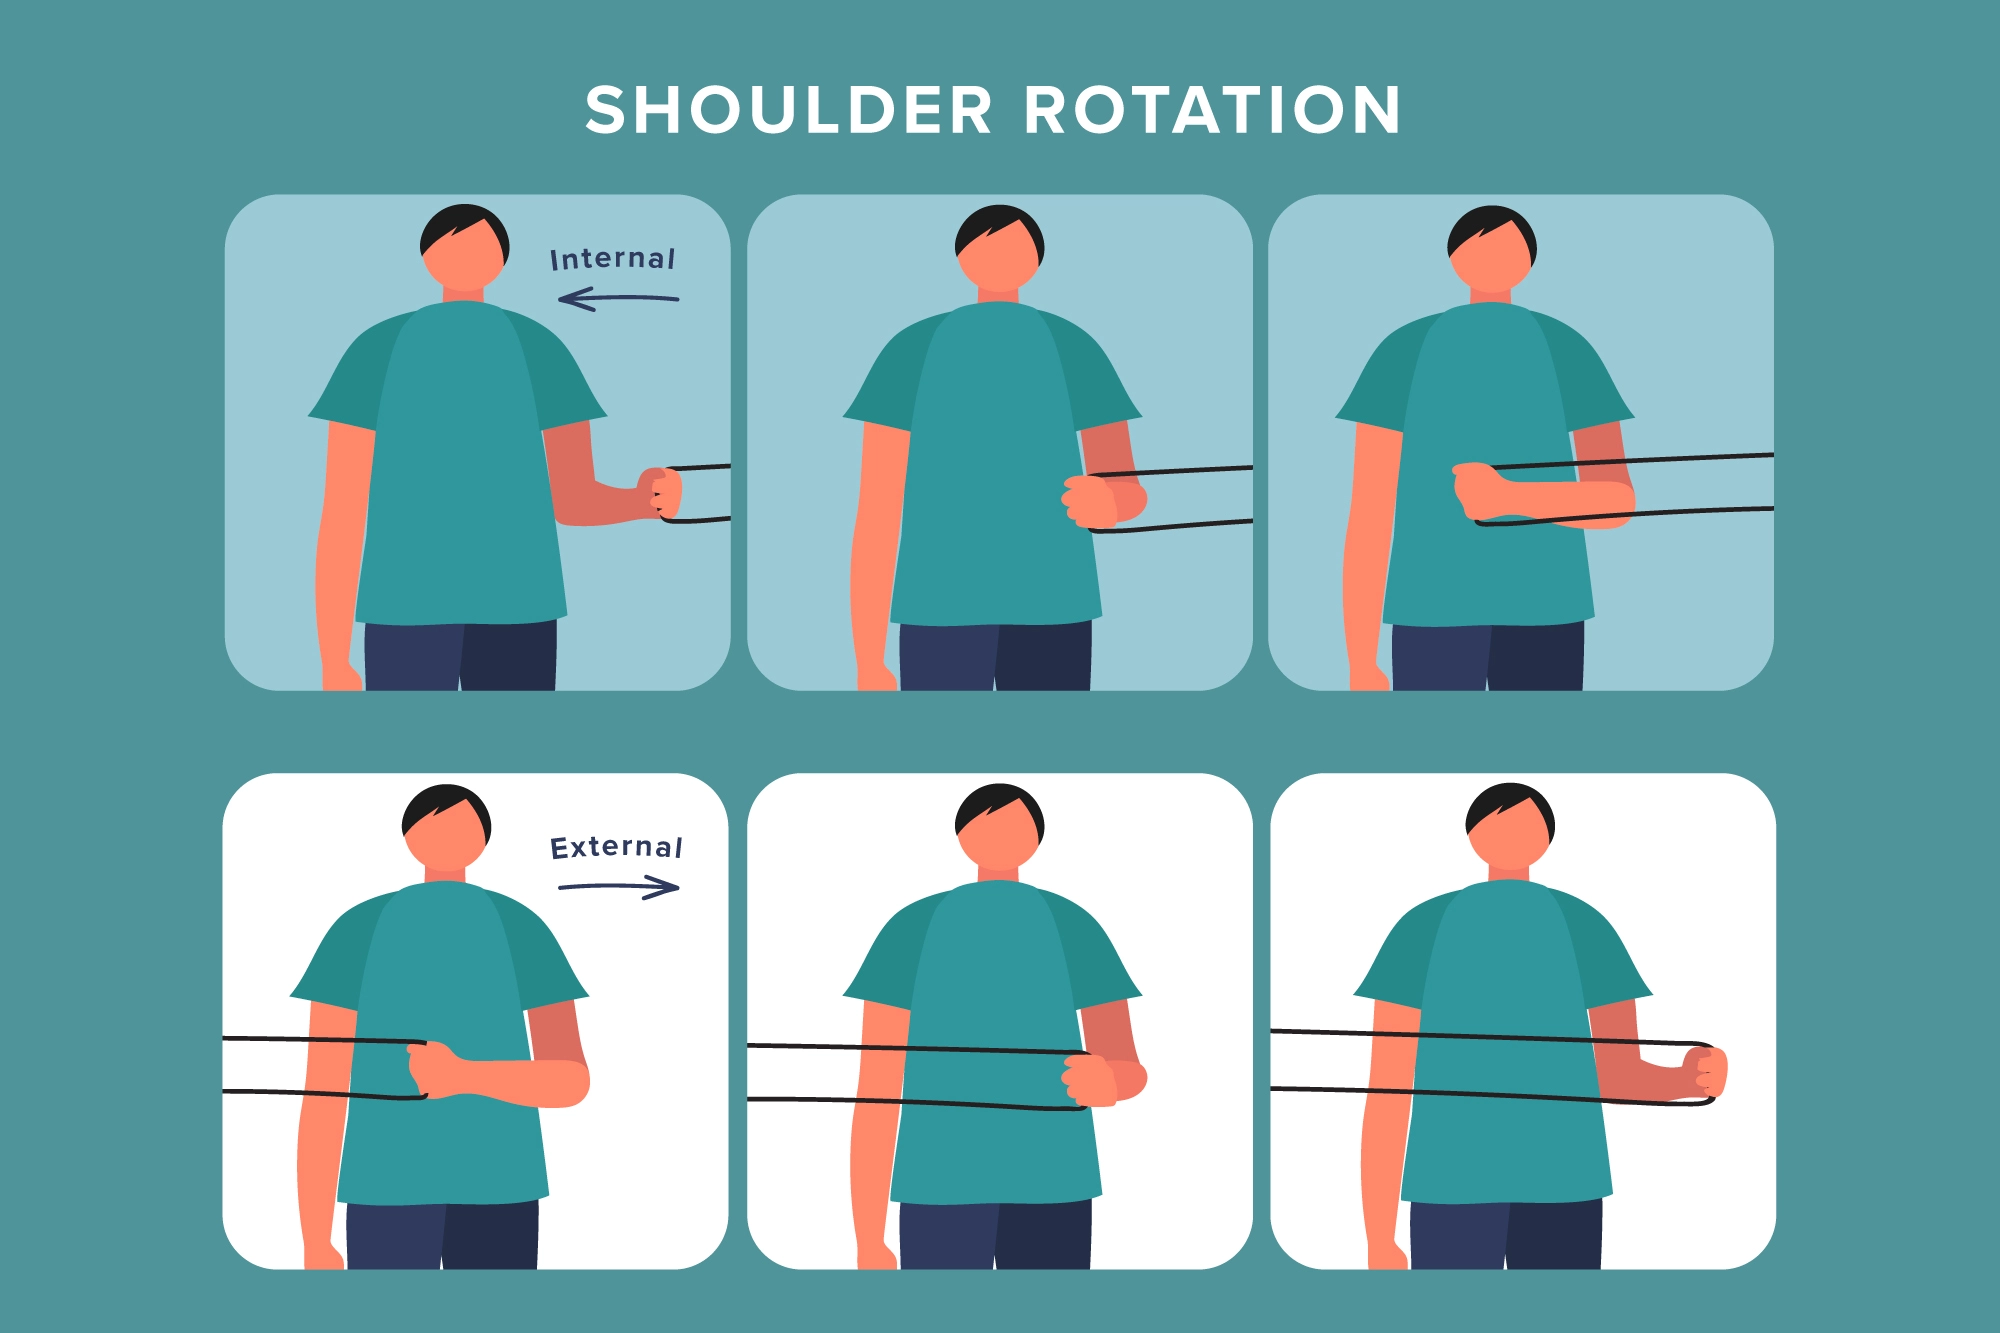 internal rotation shoulder stretch